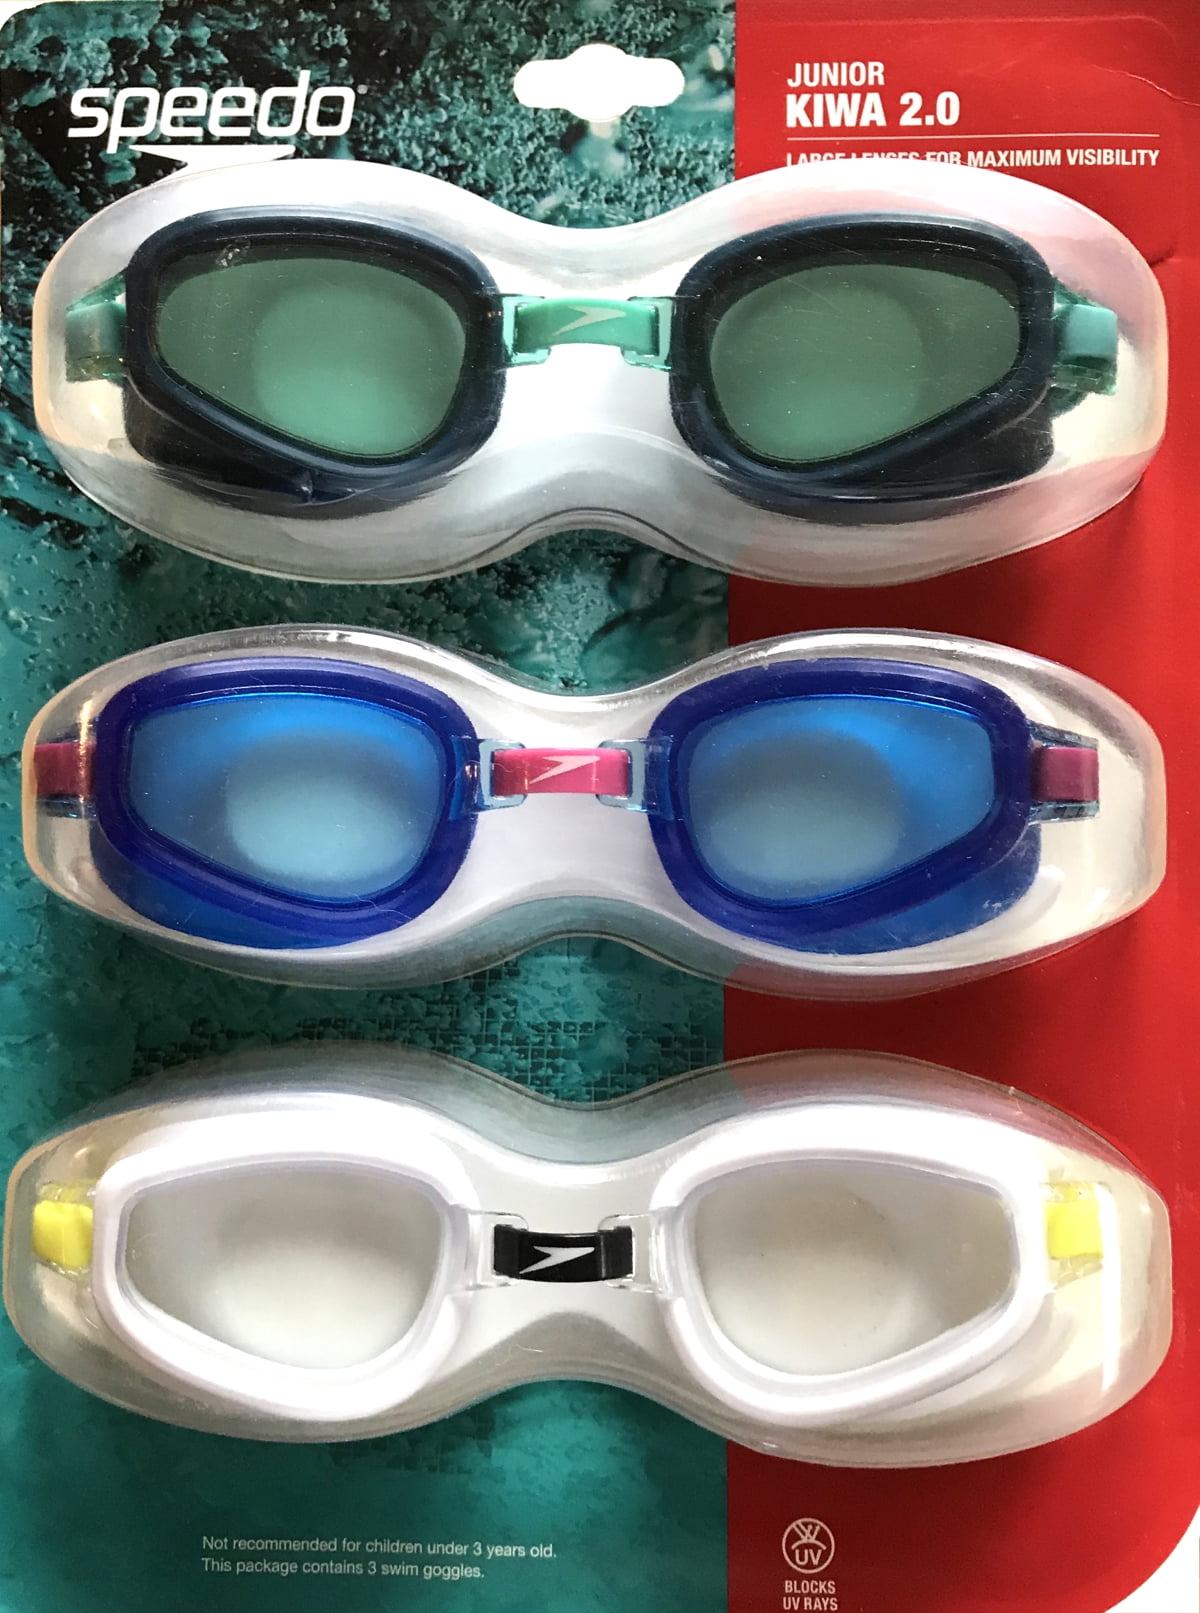 SPEEDO SWIM GOGGLES Junior Kiwa 3 Pack Of goggles NEW Free Shipping 